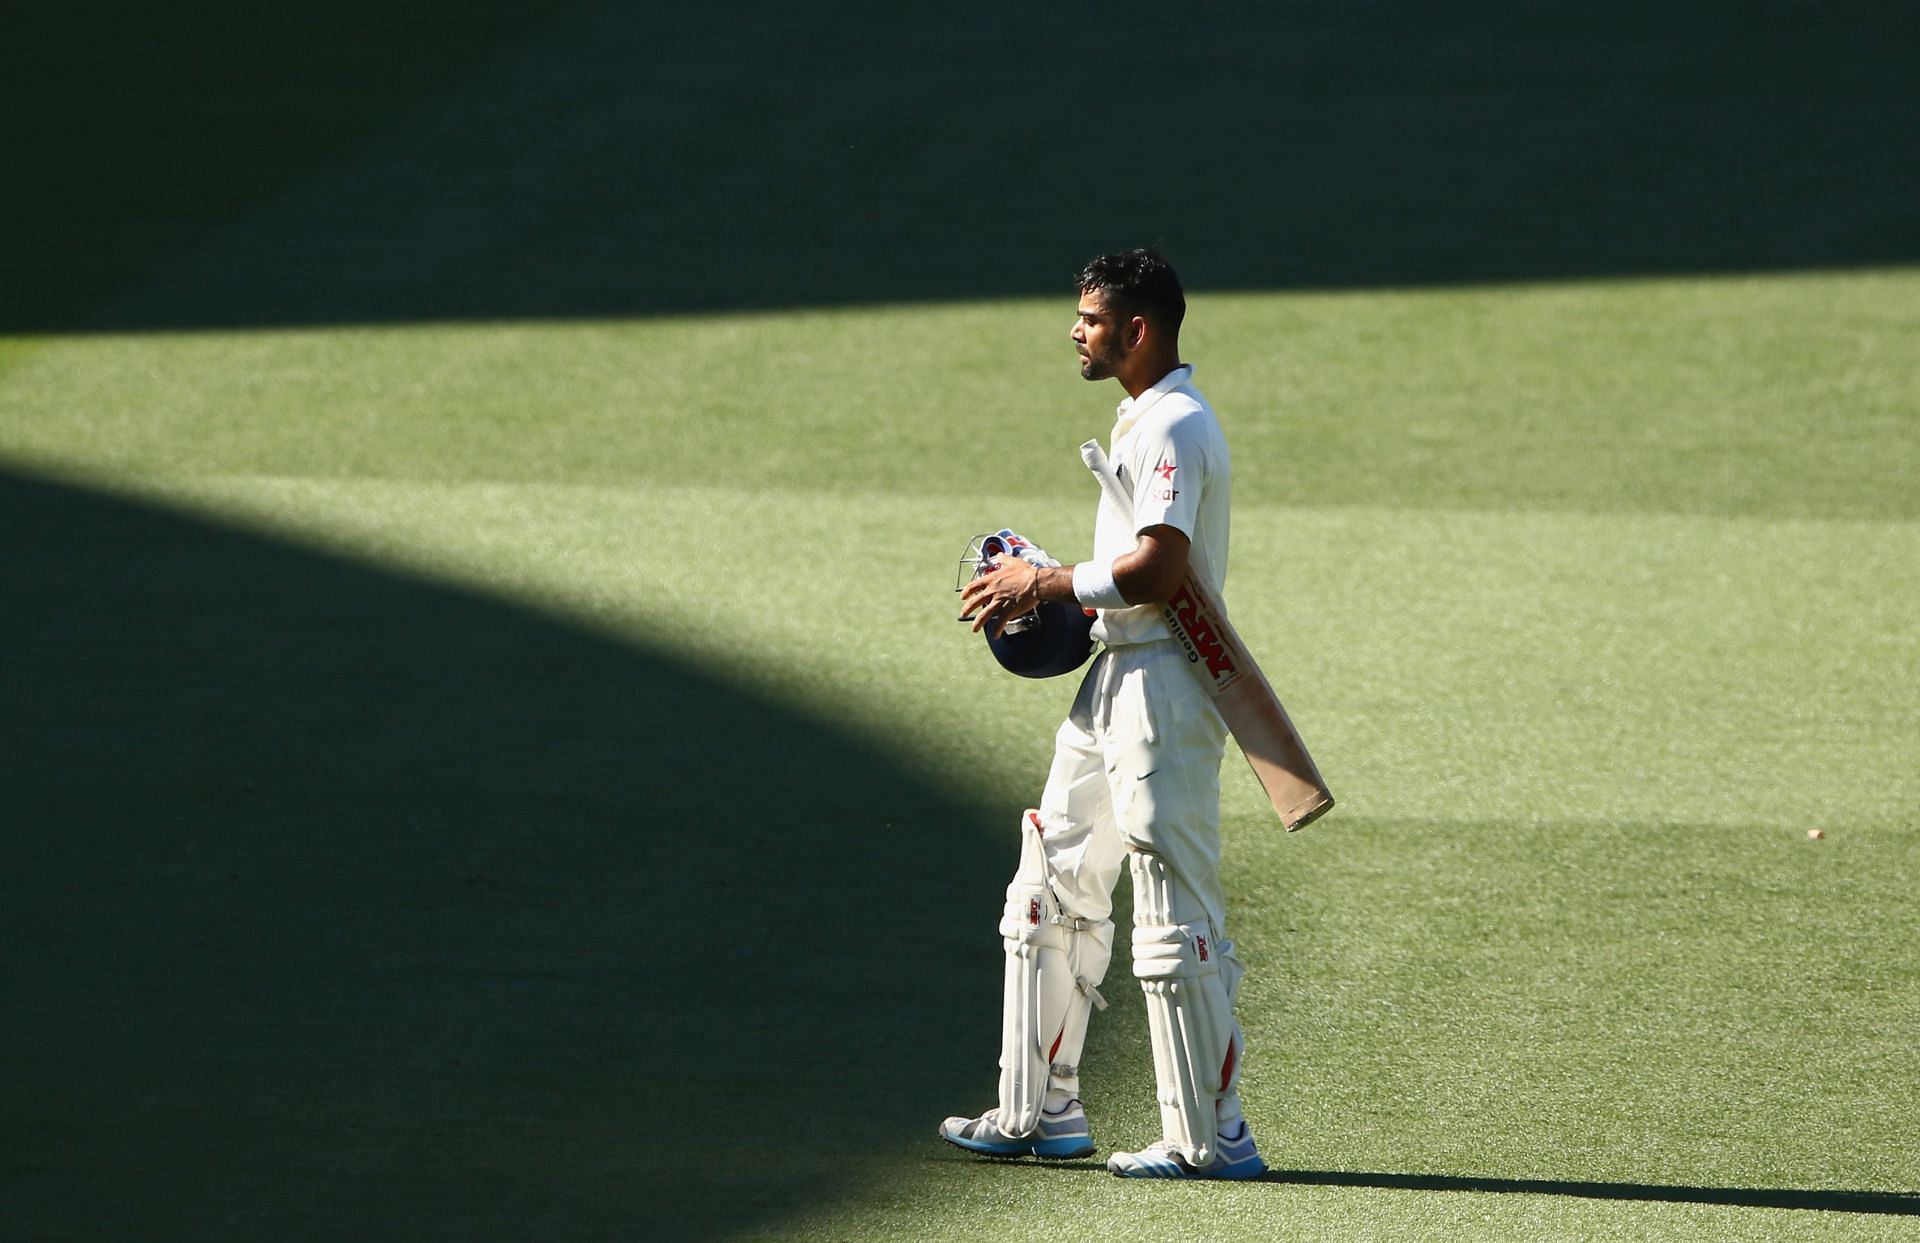 Australia v India - 1st Test: Virat Kohli dismissed after his knock of 141 in the 4th innings chase